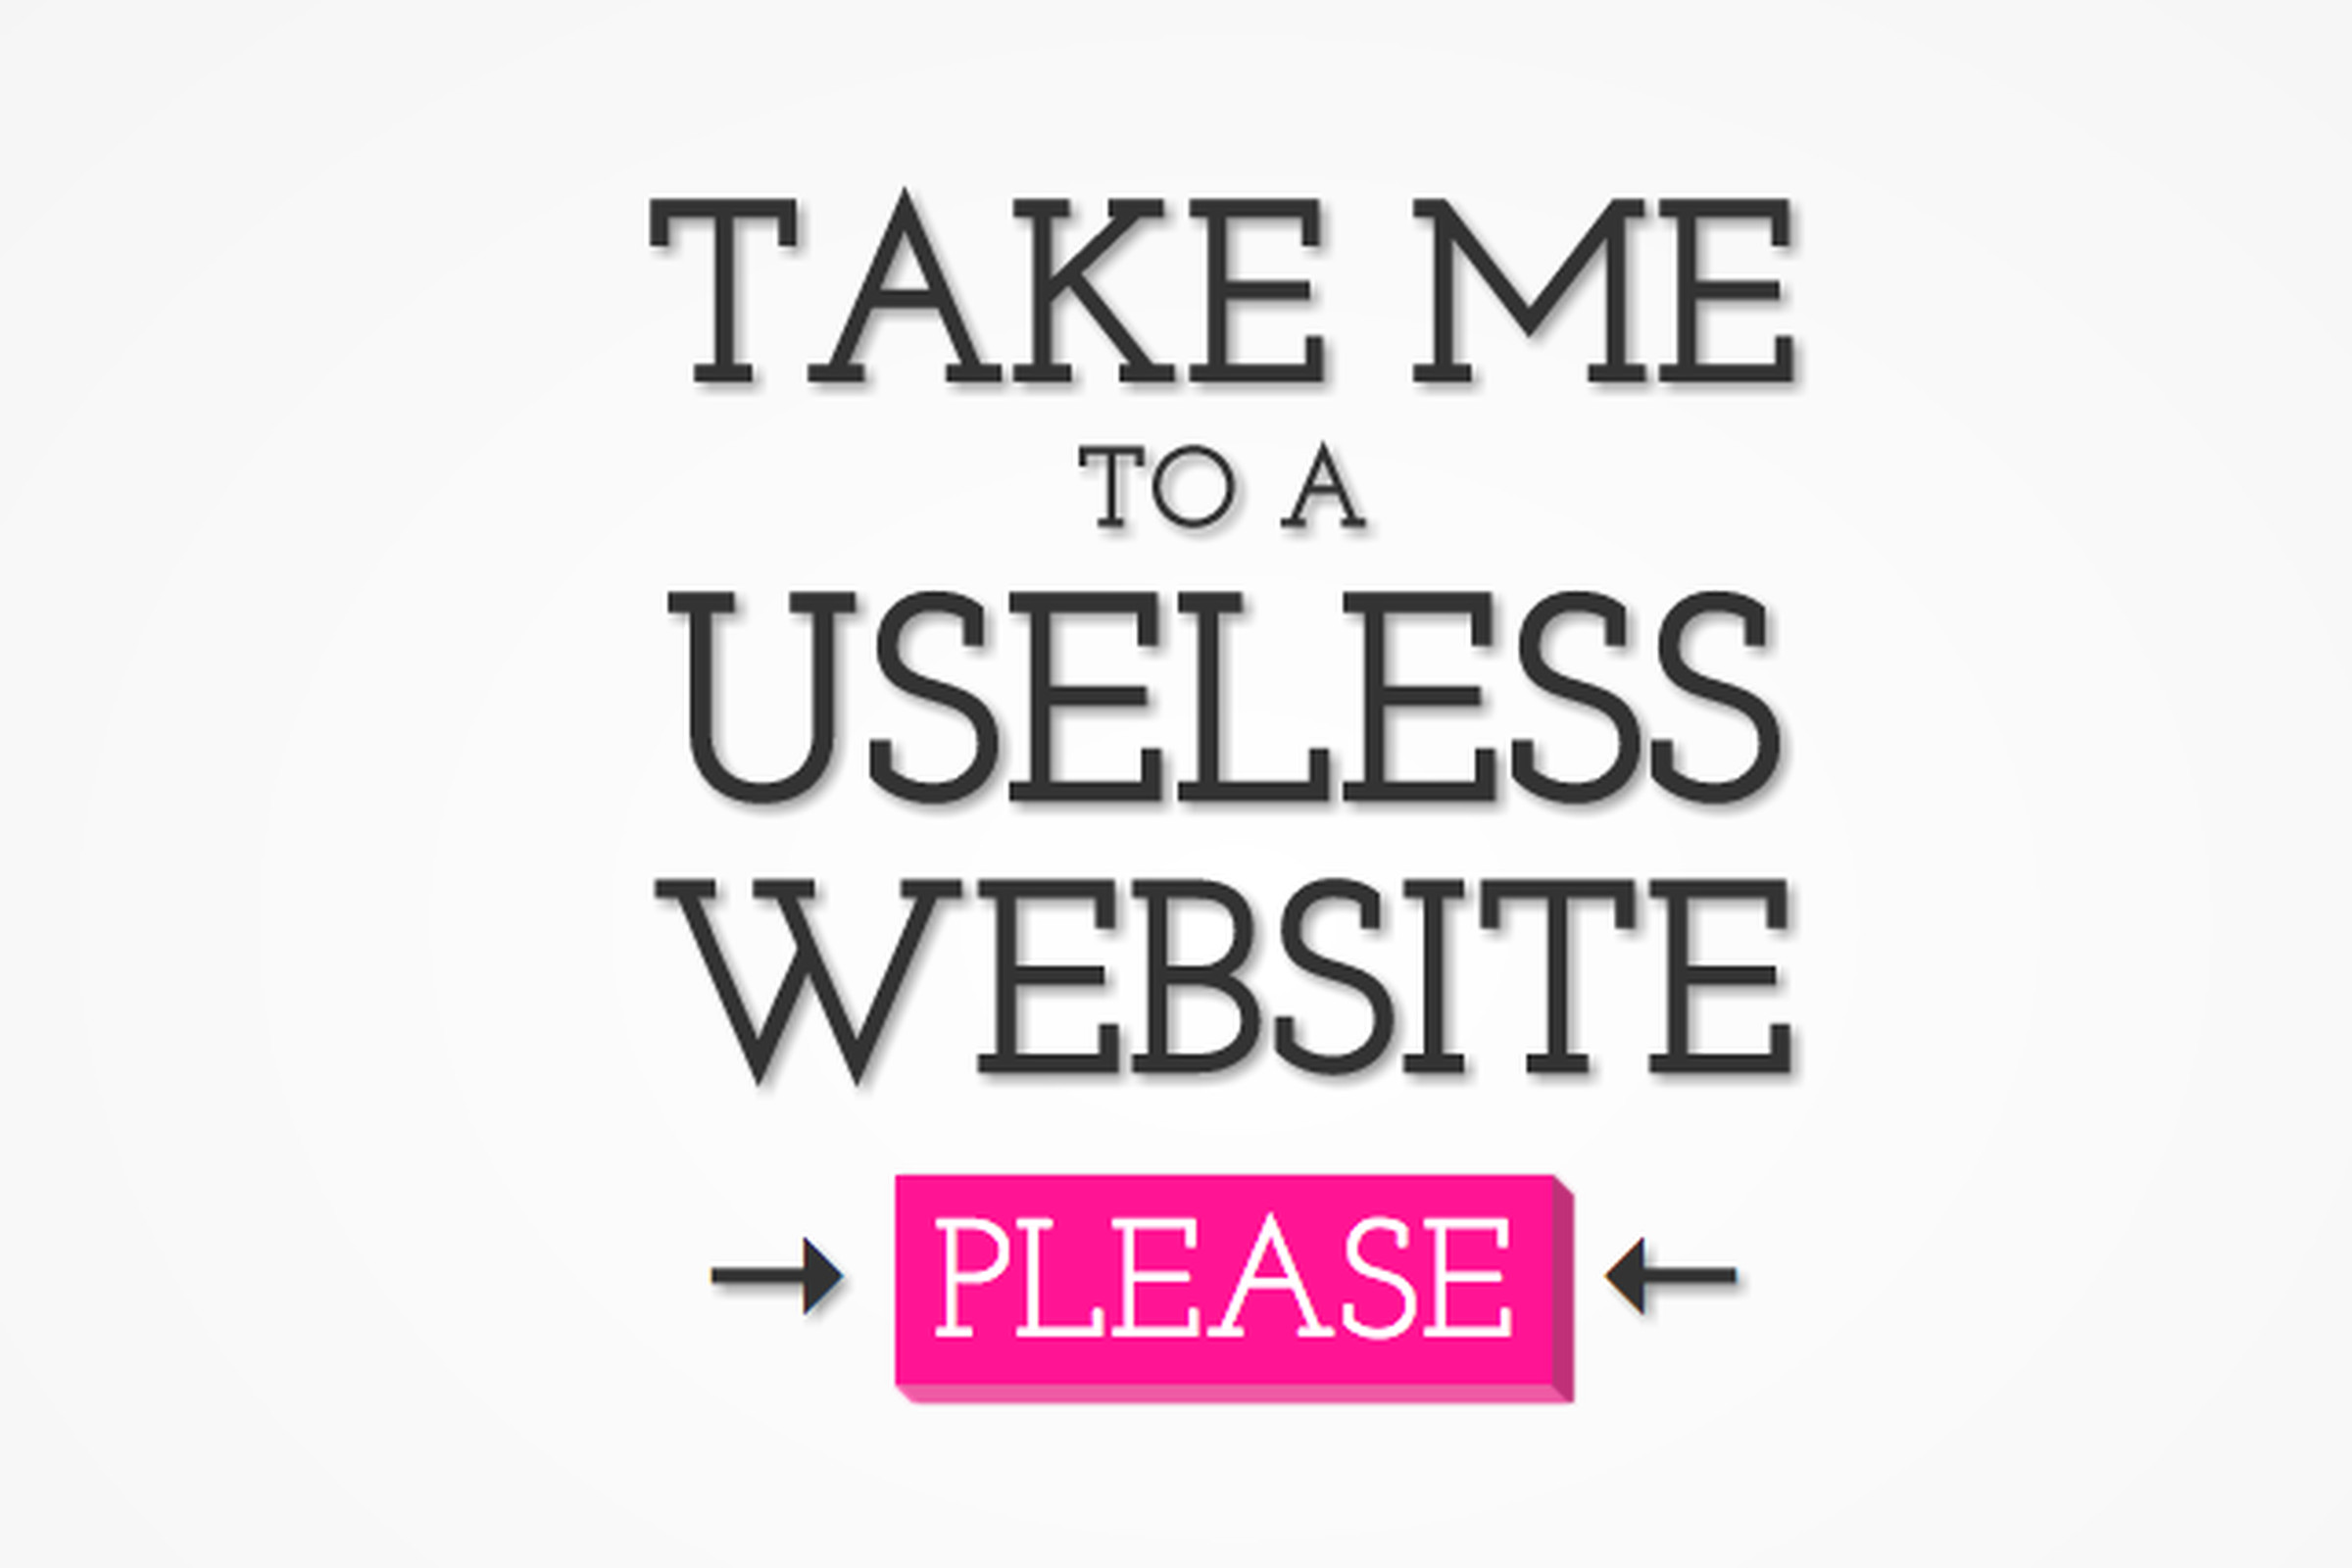 The useless web